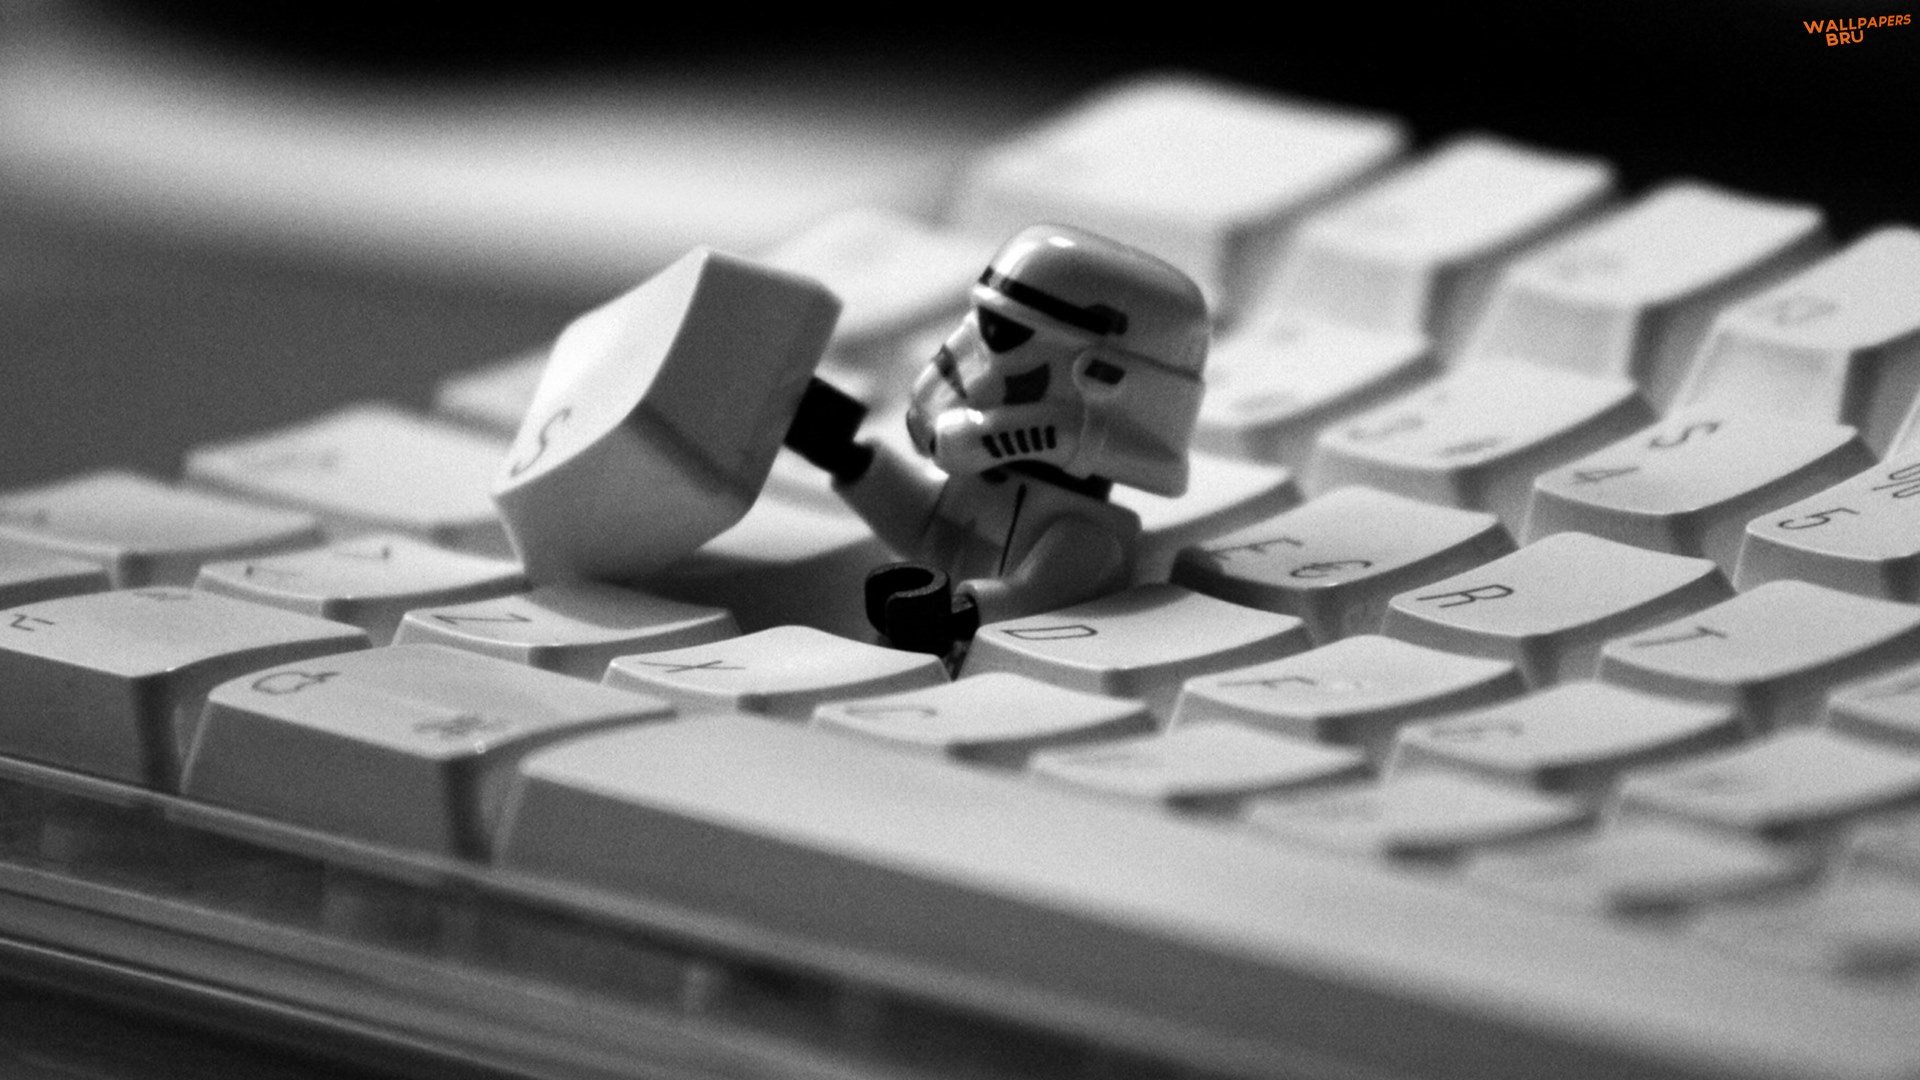 Hd Imperial Stormtrooper Wallpaper Hd - Star Wars Lego Mac - HD Wallpaper 